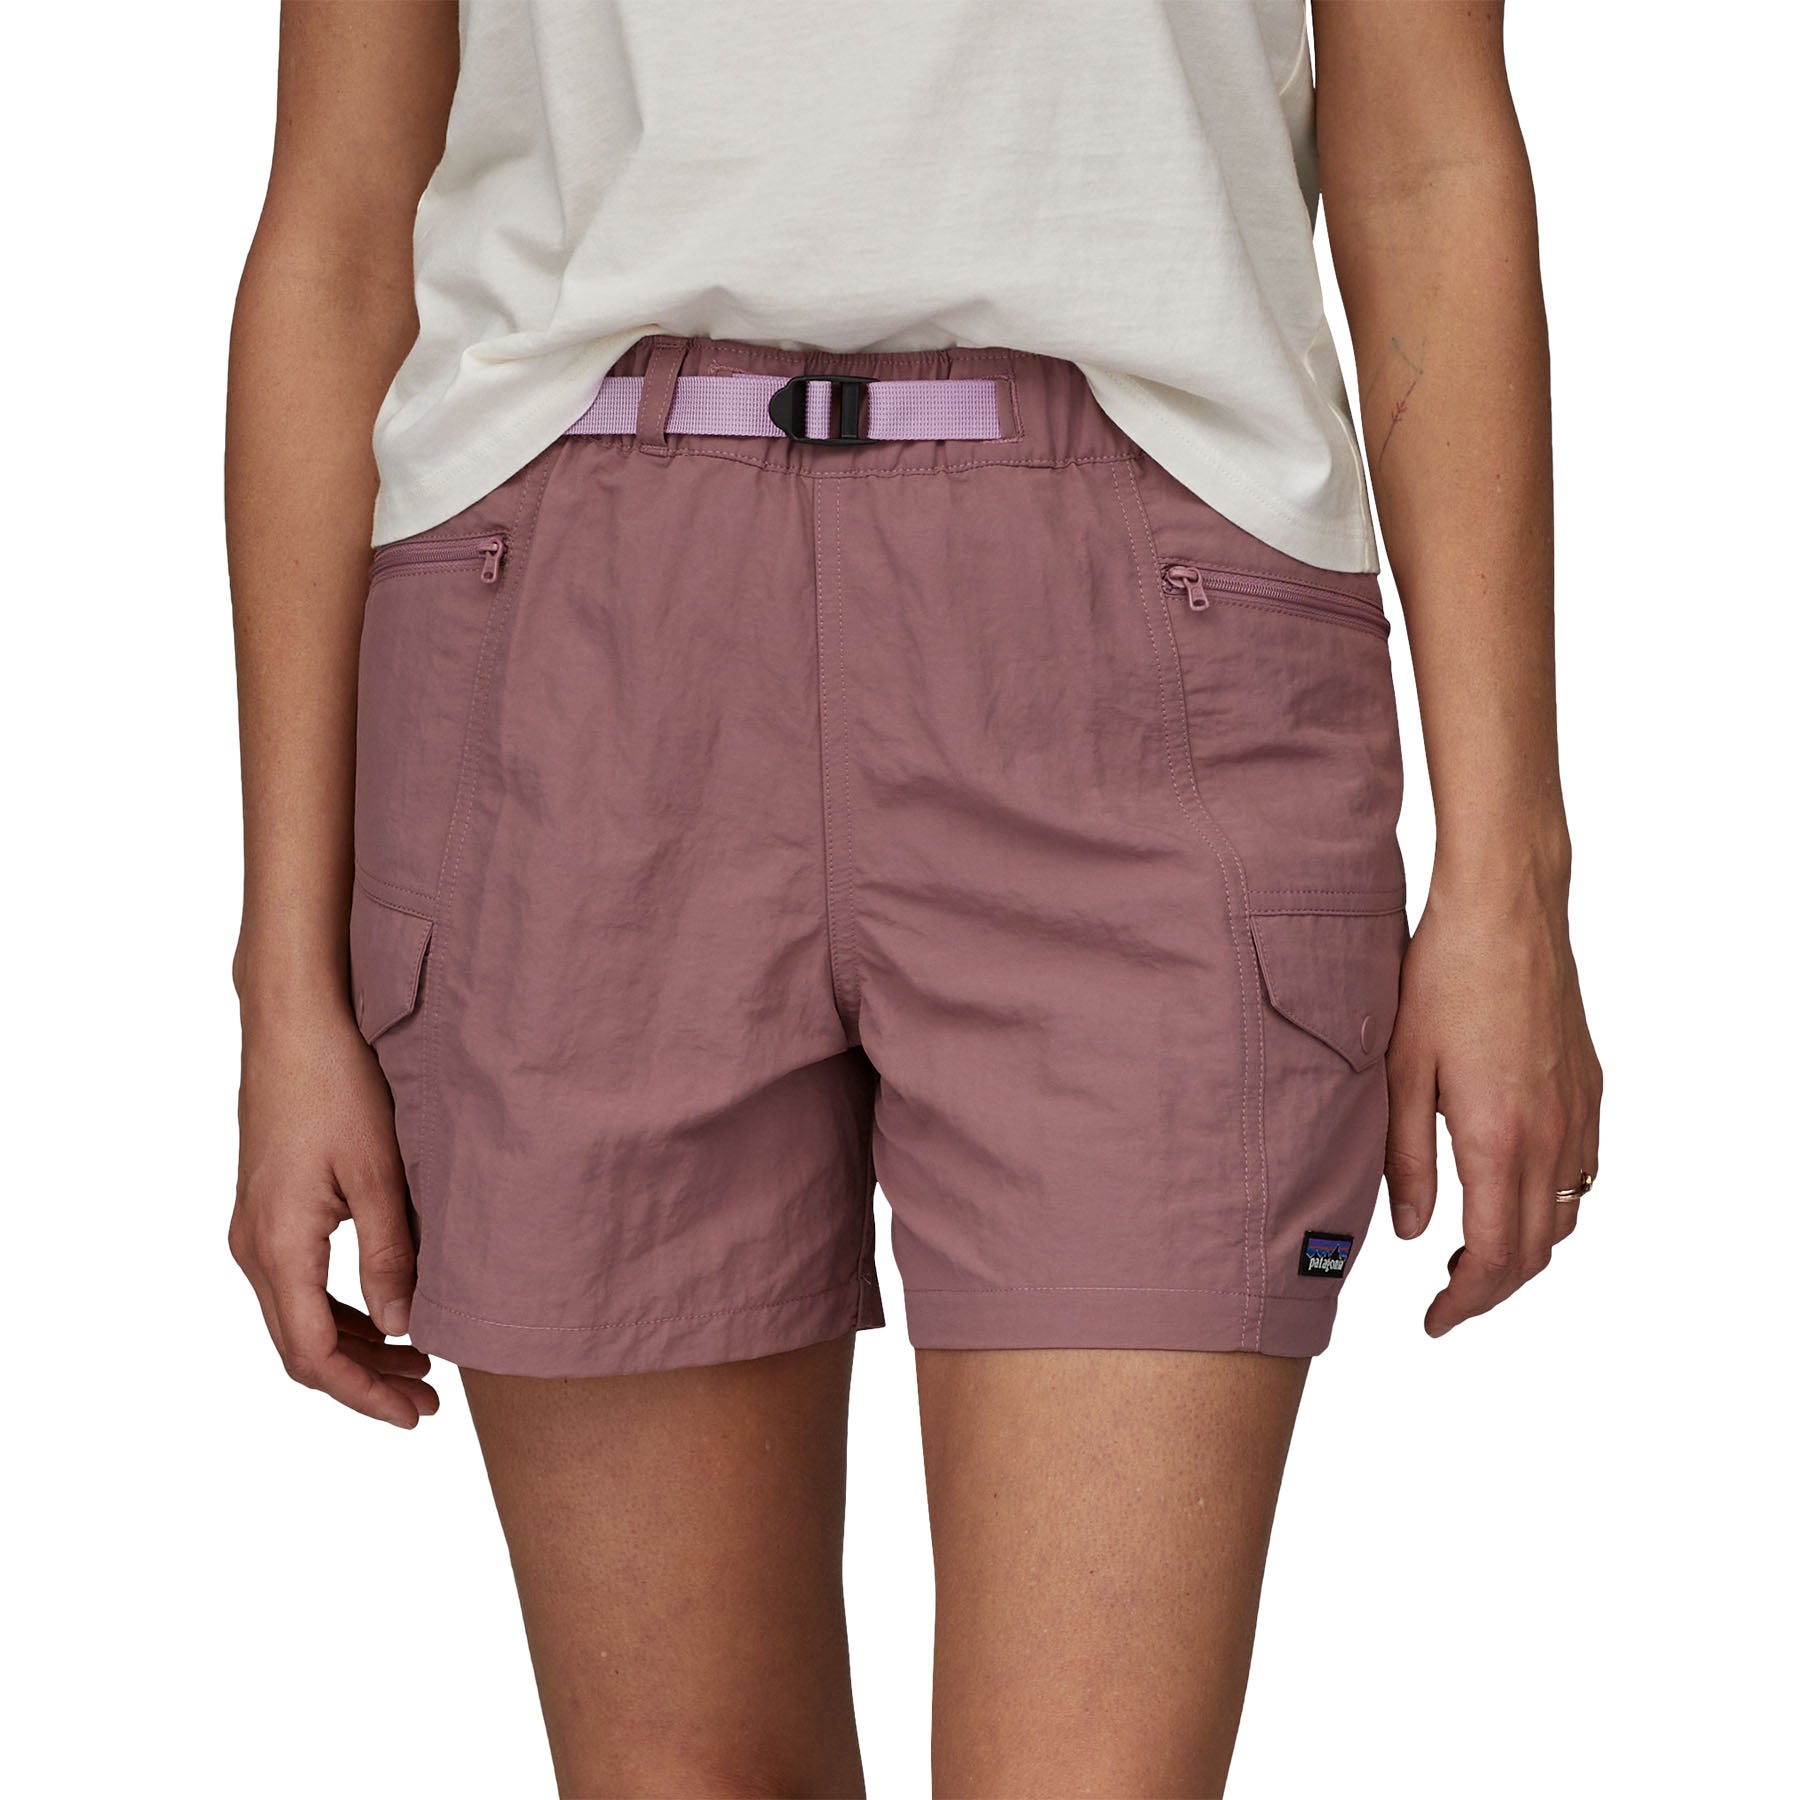 Women's Outdoor Everyday Shorts - 4"